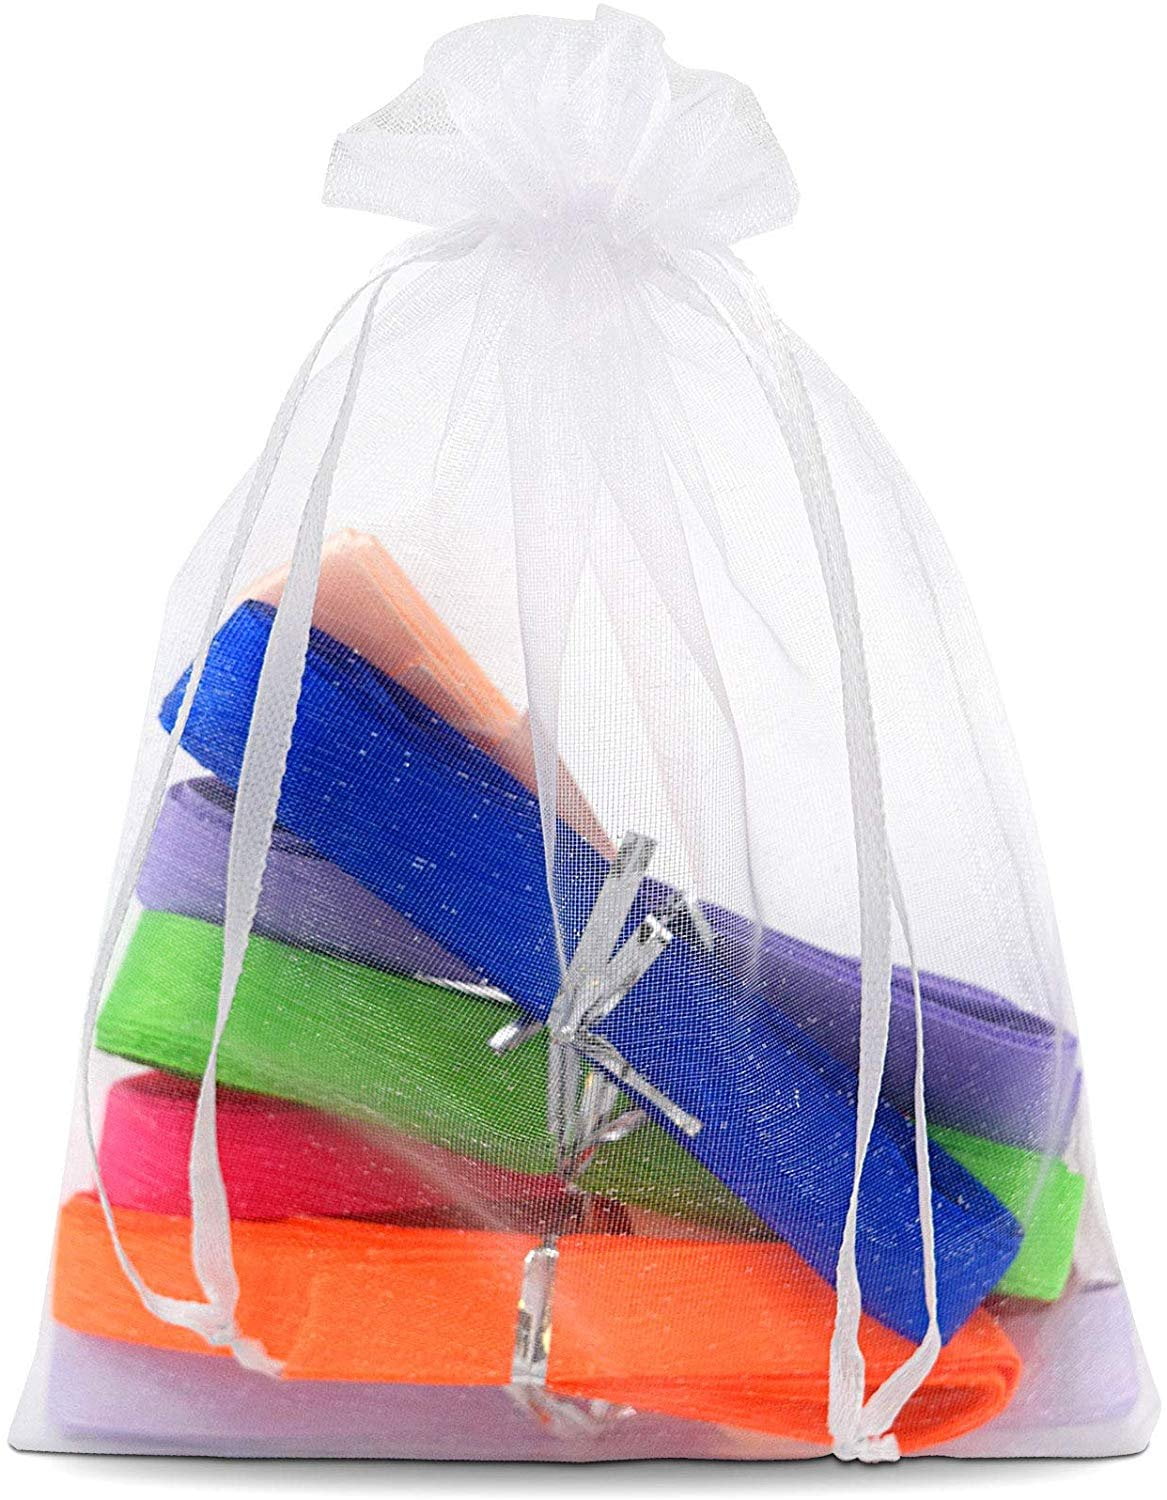 50pcs Organza Drawstring Pouch Small Mesh Bag Wedding Party Favor Candy Gift Bag 